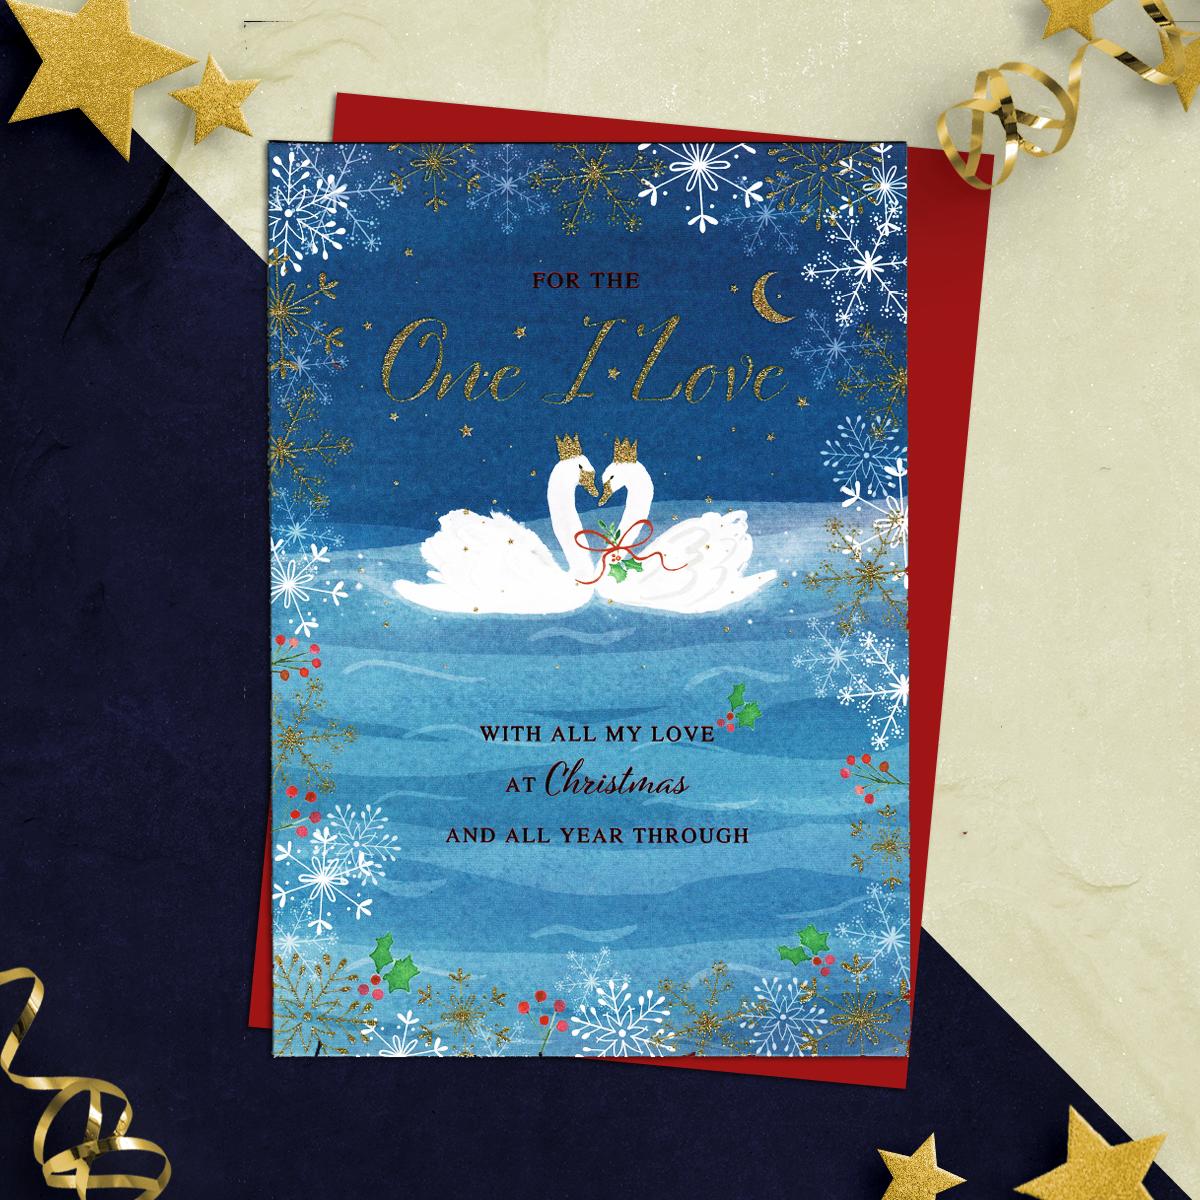 One I Love Festive Swans Christmas Card Alongside Its Red Envelope